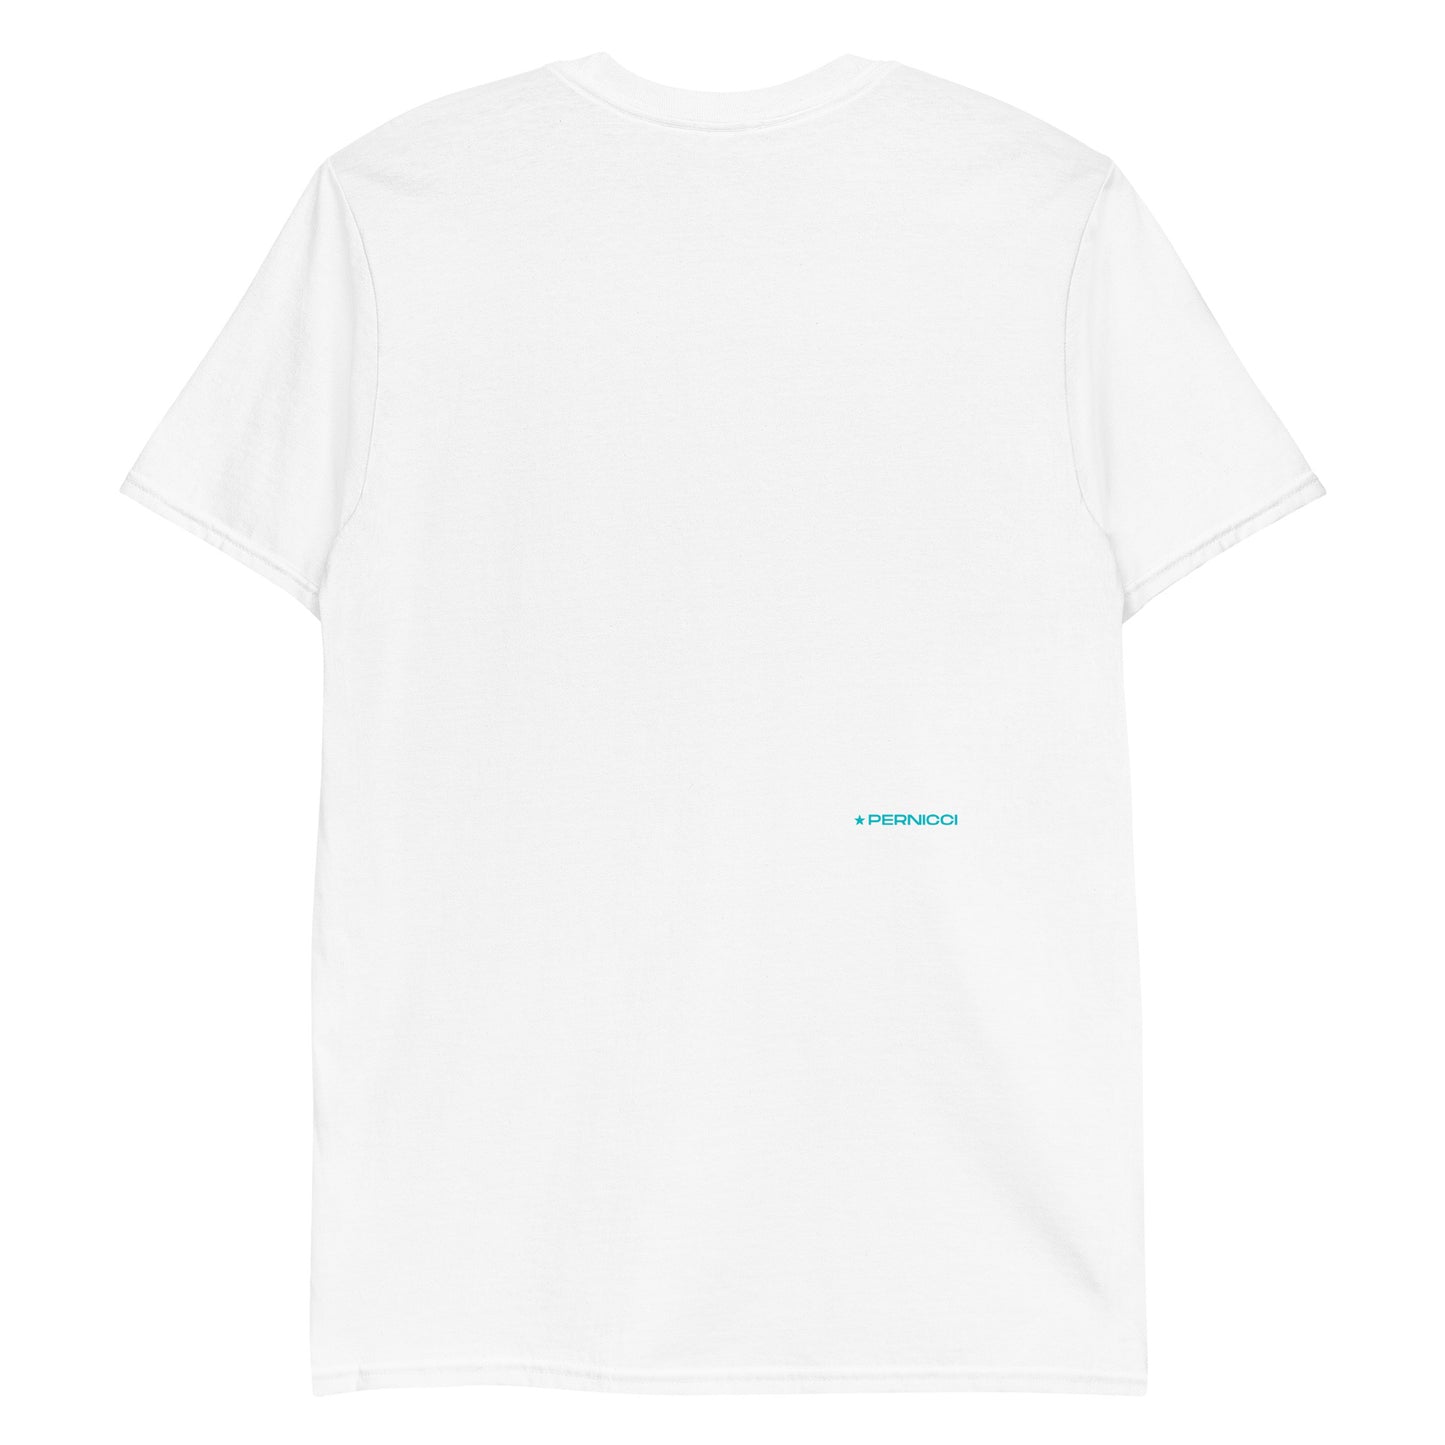 T-Shirt CA Frame7